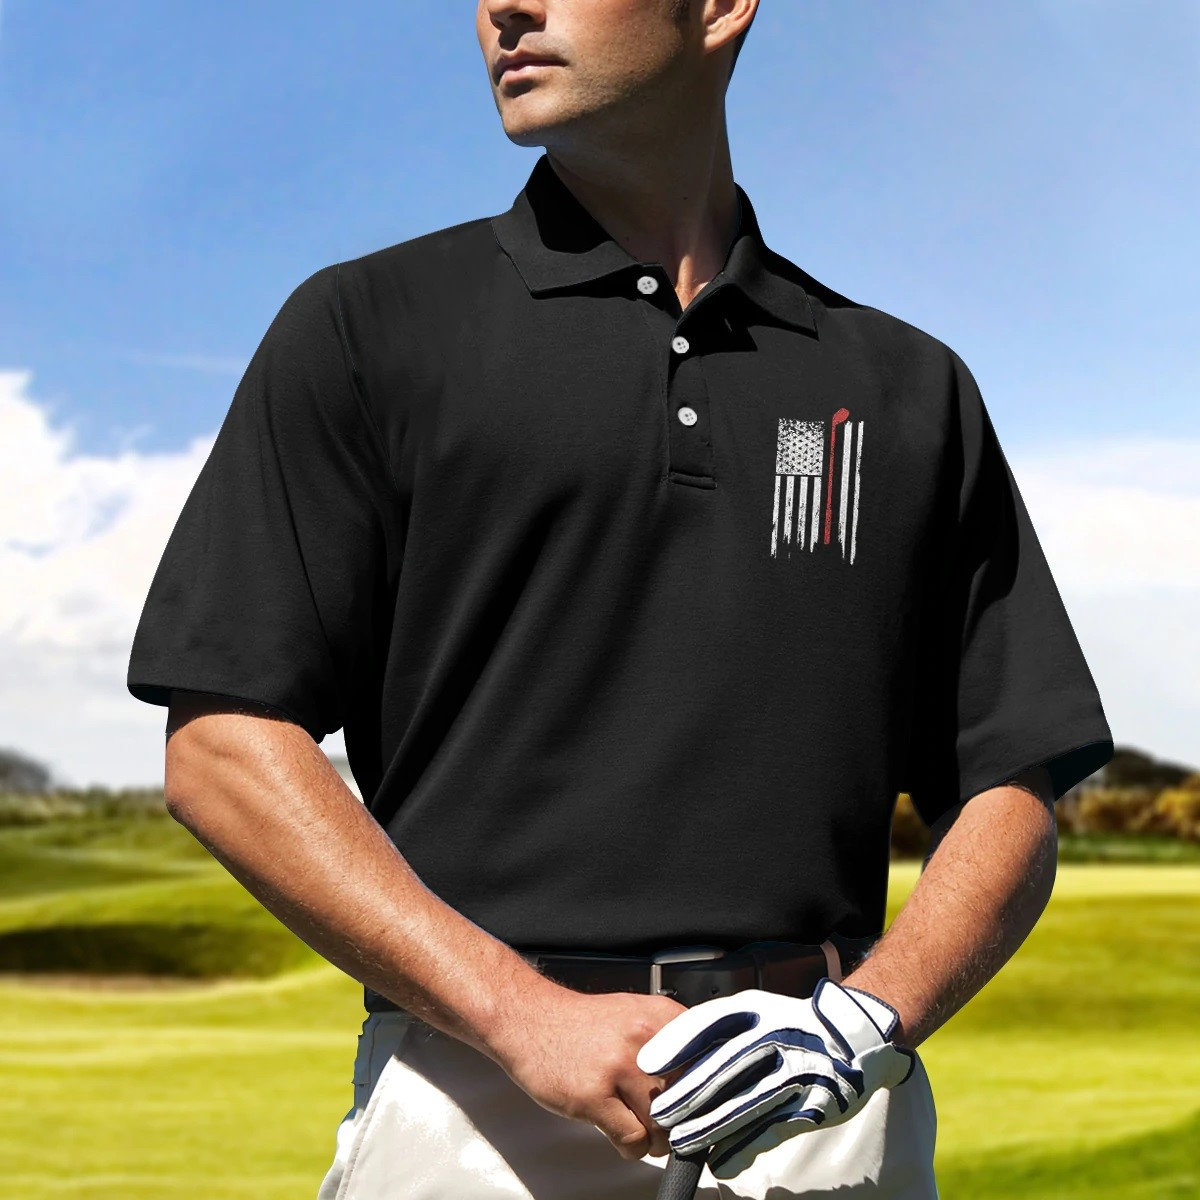 Golf American Flag Golf Polo Shirt,  American Flag Polo Shirt, Patriotic Golf Shirt For Men